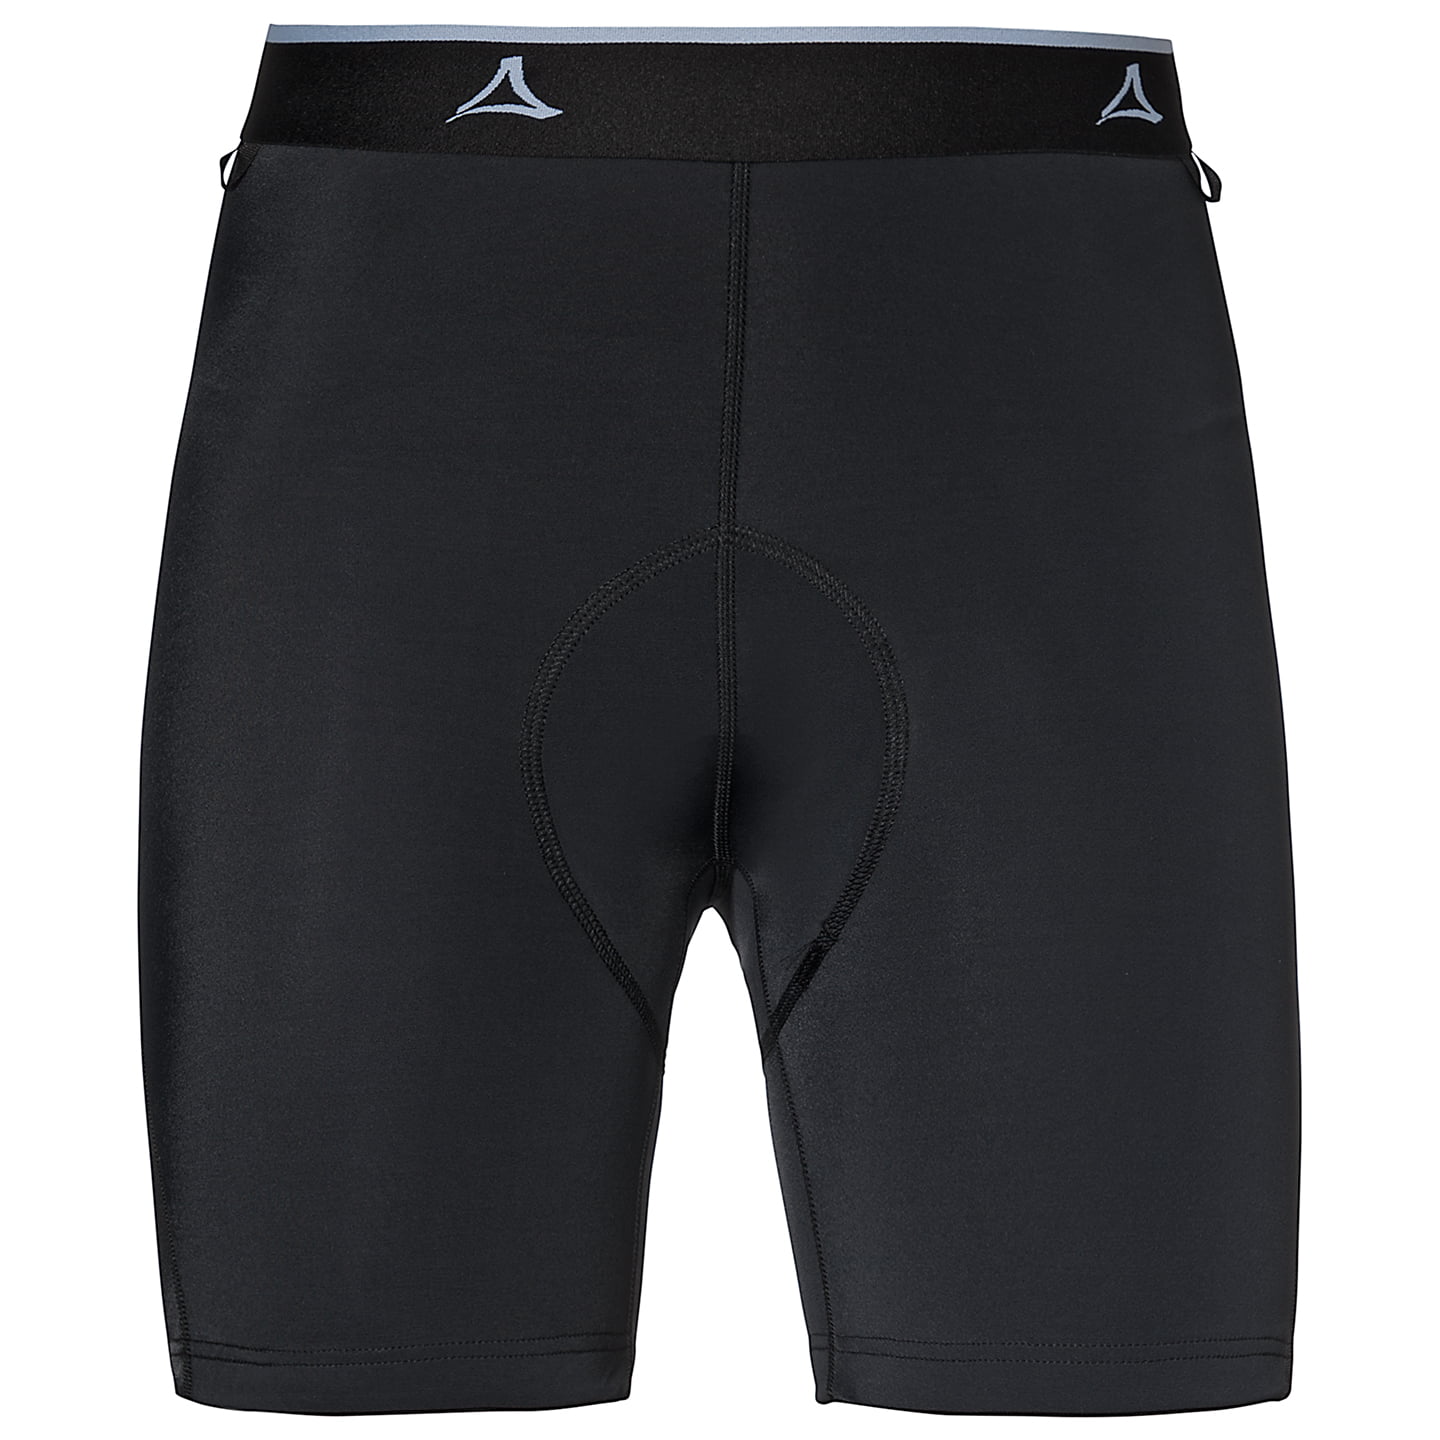 SCHOFFEL Skin Pants 2h Women’s Liner Shorts, size 40, Briefs, Cycling gear